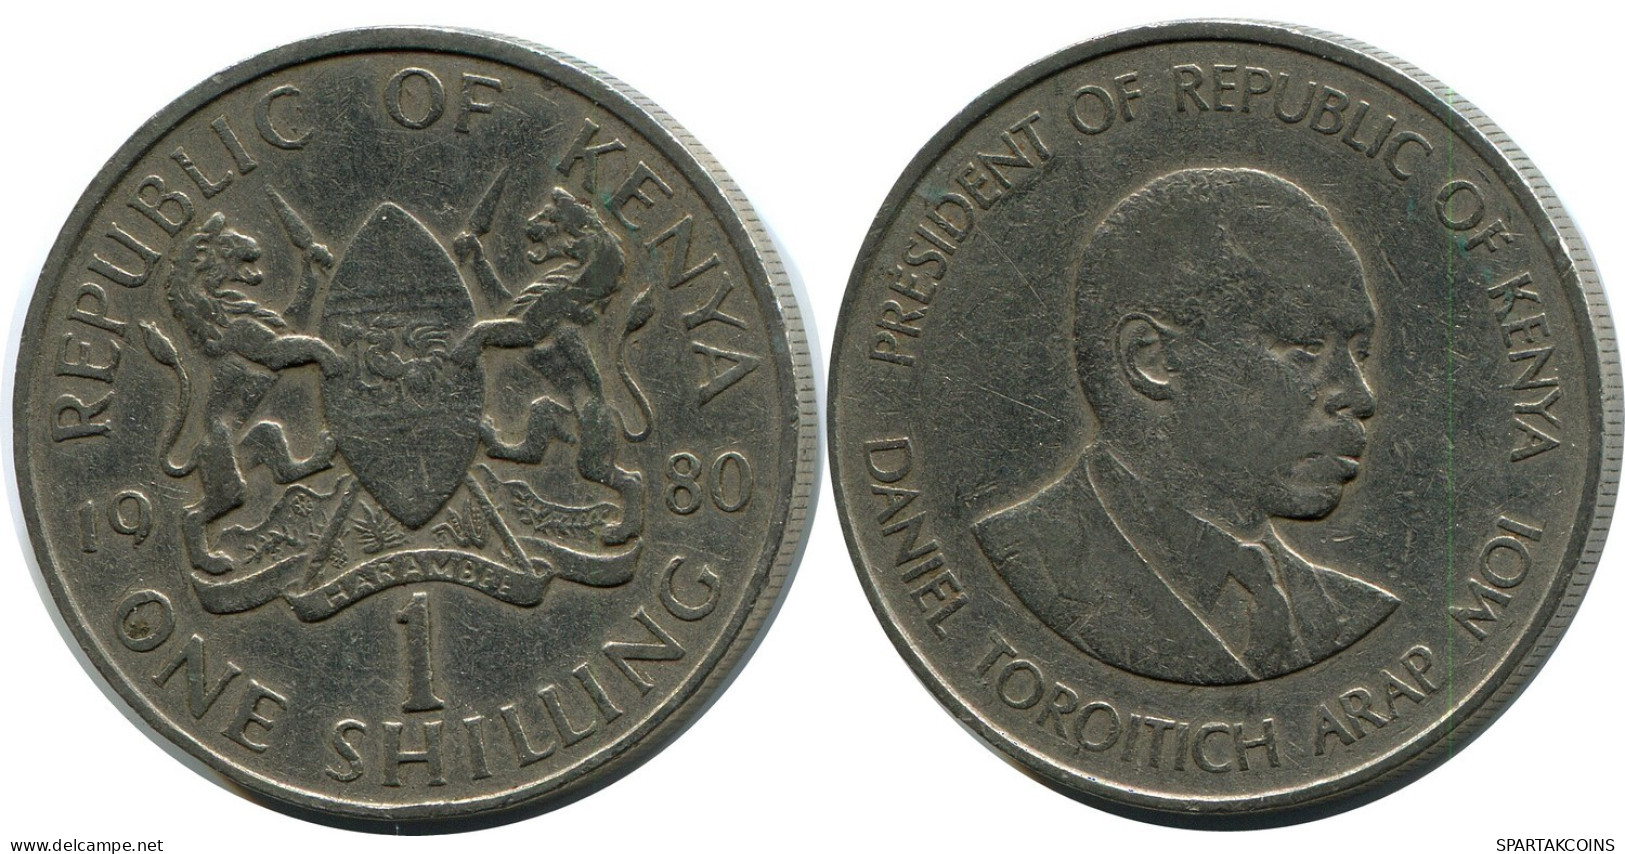 1 SHILLING 1980 KENYA Coin #AZ191.U.A - Kenia